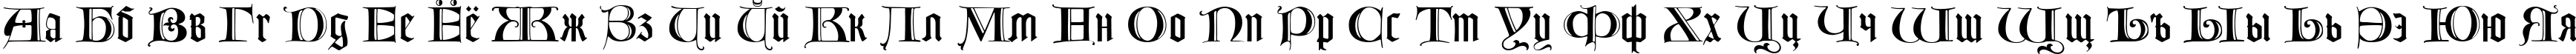 Пример написания русского алфавита шрифтом Lombardina One Roman